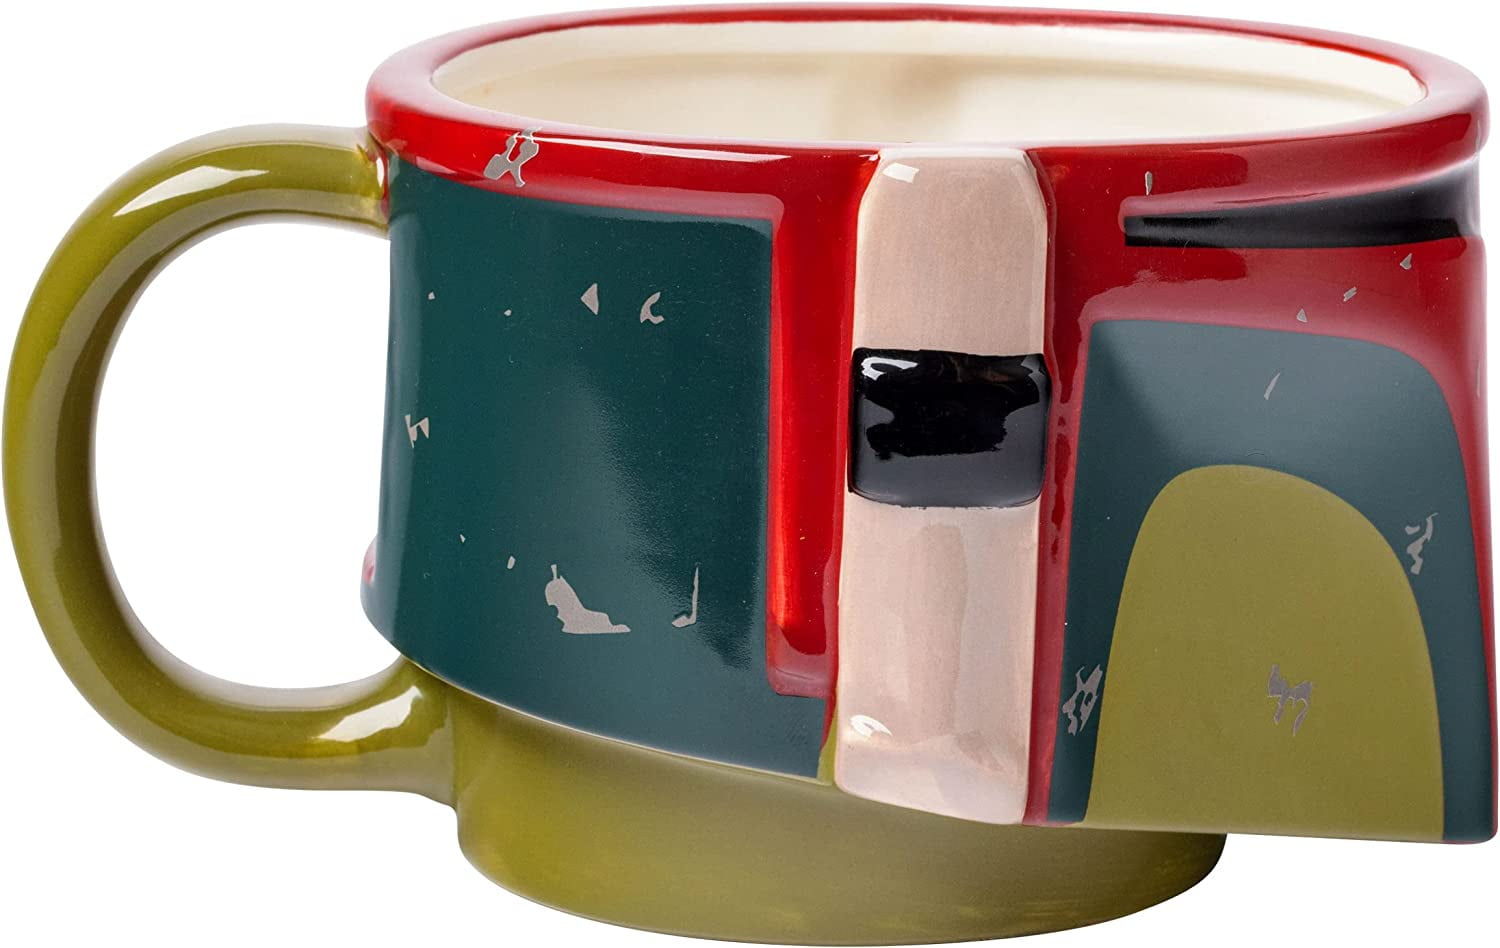 v2 Boba Fett Helmet Build And Paint v2 Coffee Mug by S Jamieson - Pixels